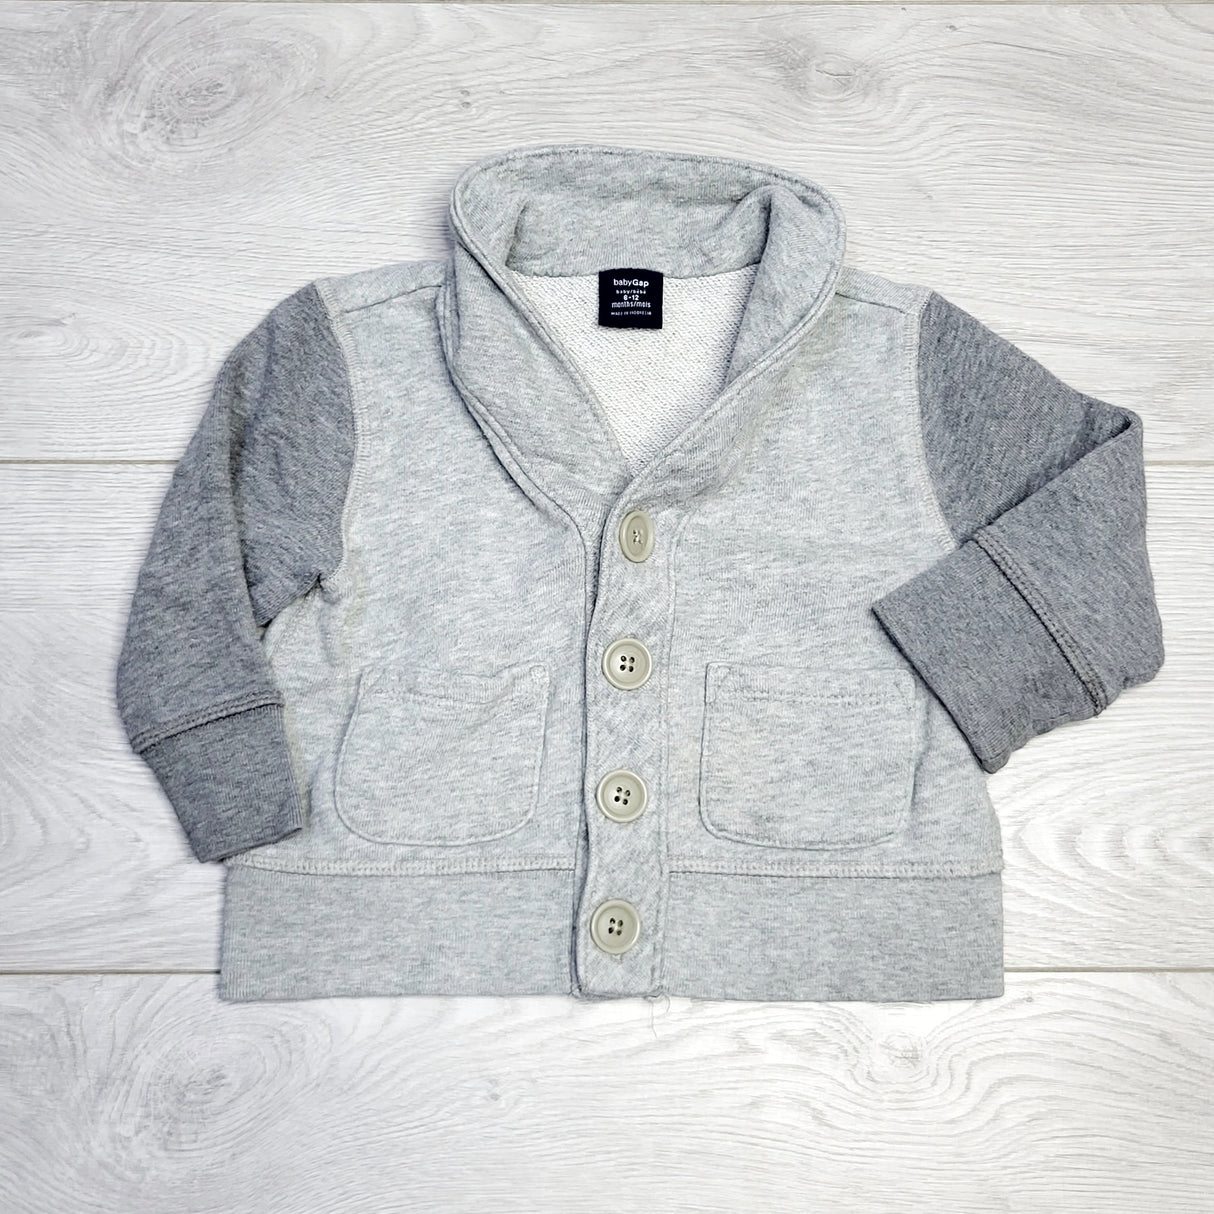 RZA2 - Gap grey cotton cardigan. Size 6-12 months